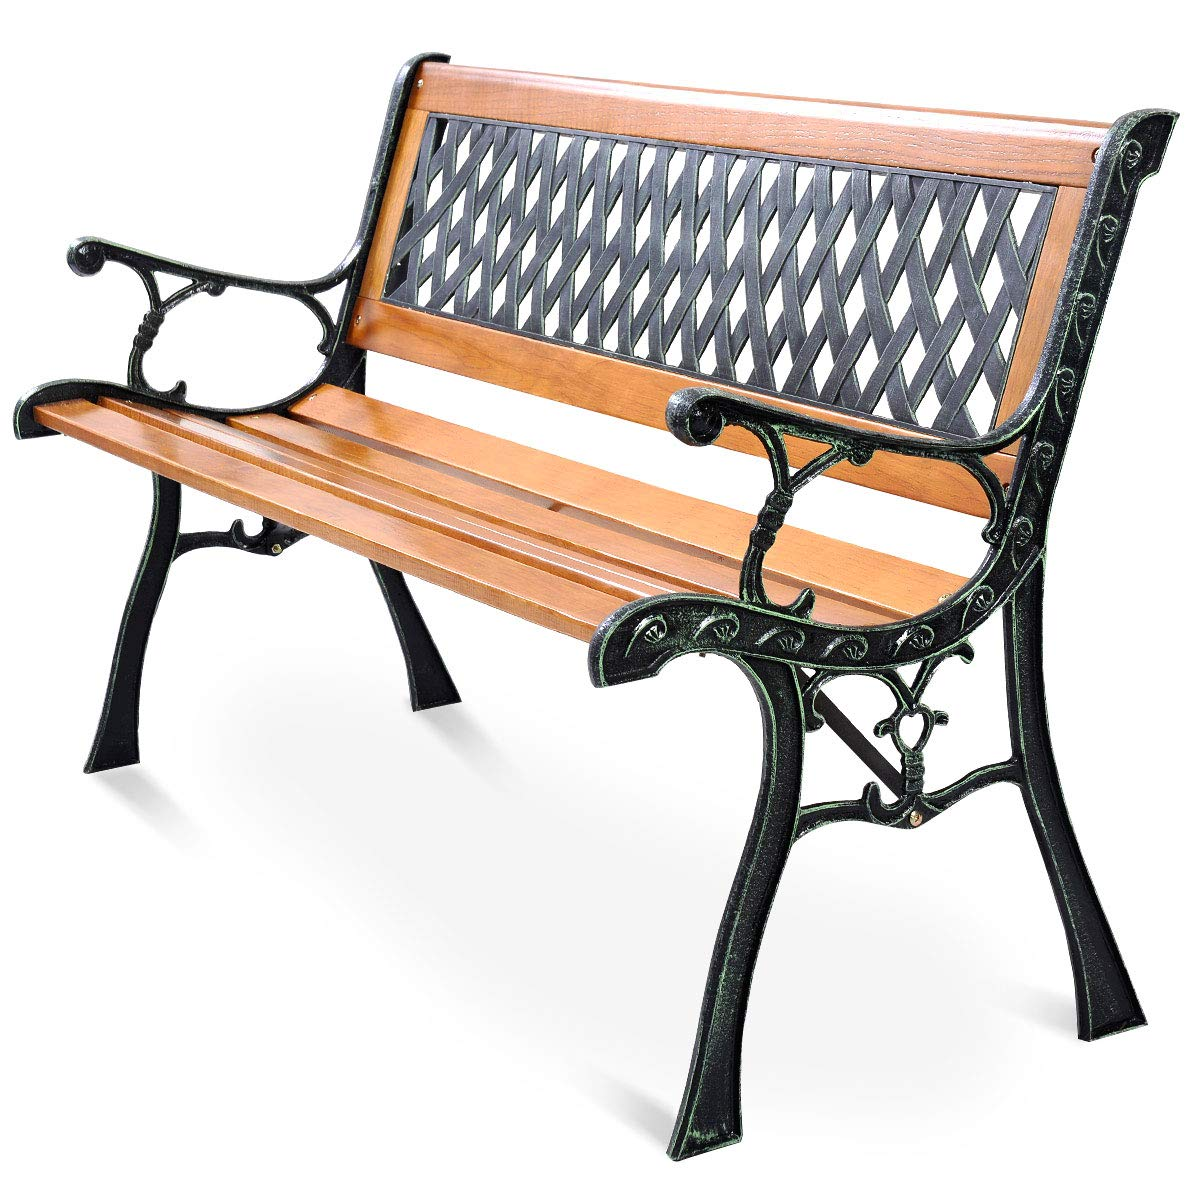 Giantex 50'' Patio Bench, Outdoor Furniture Cast Iron Hardwood Frame Porch Loveseat